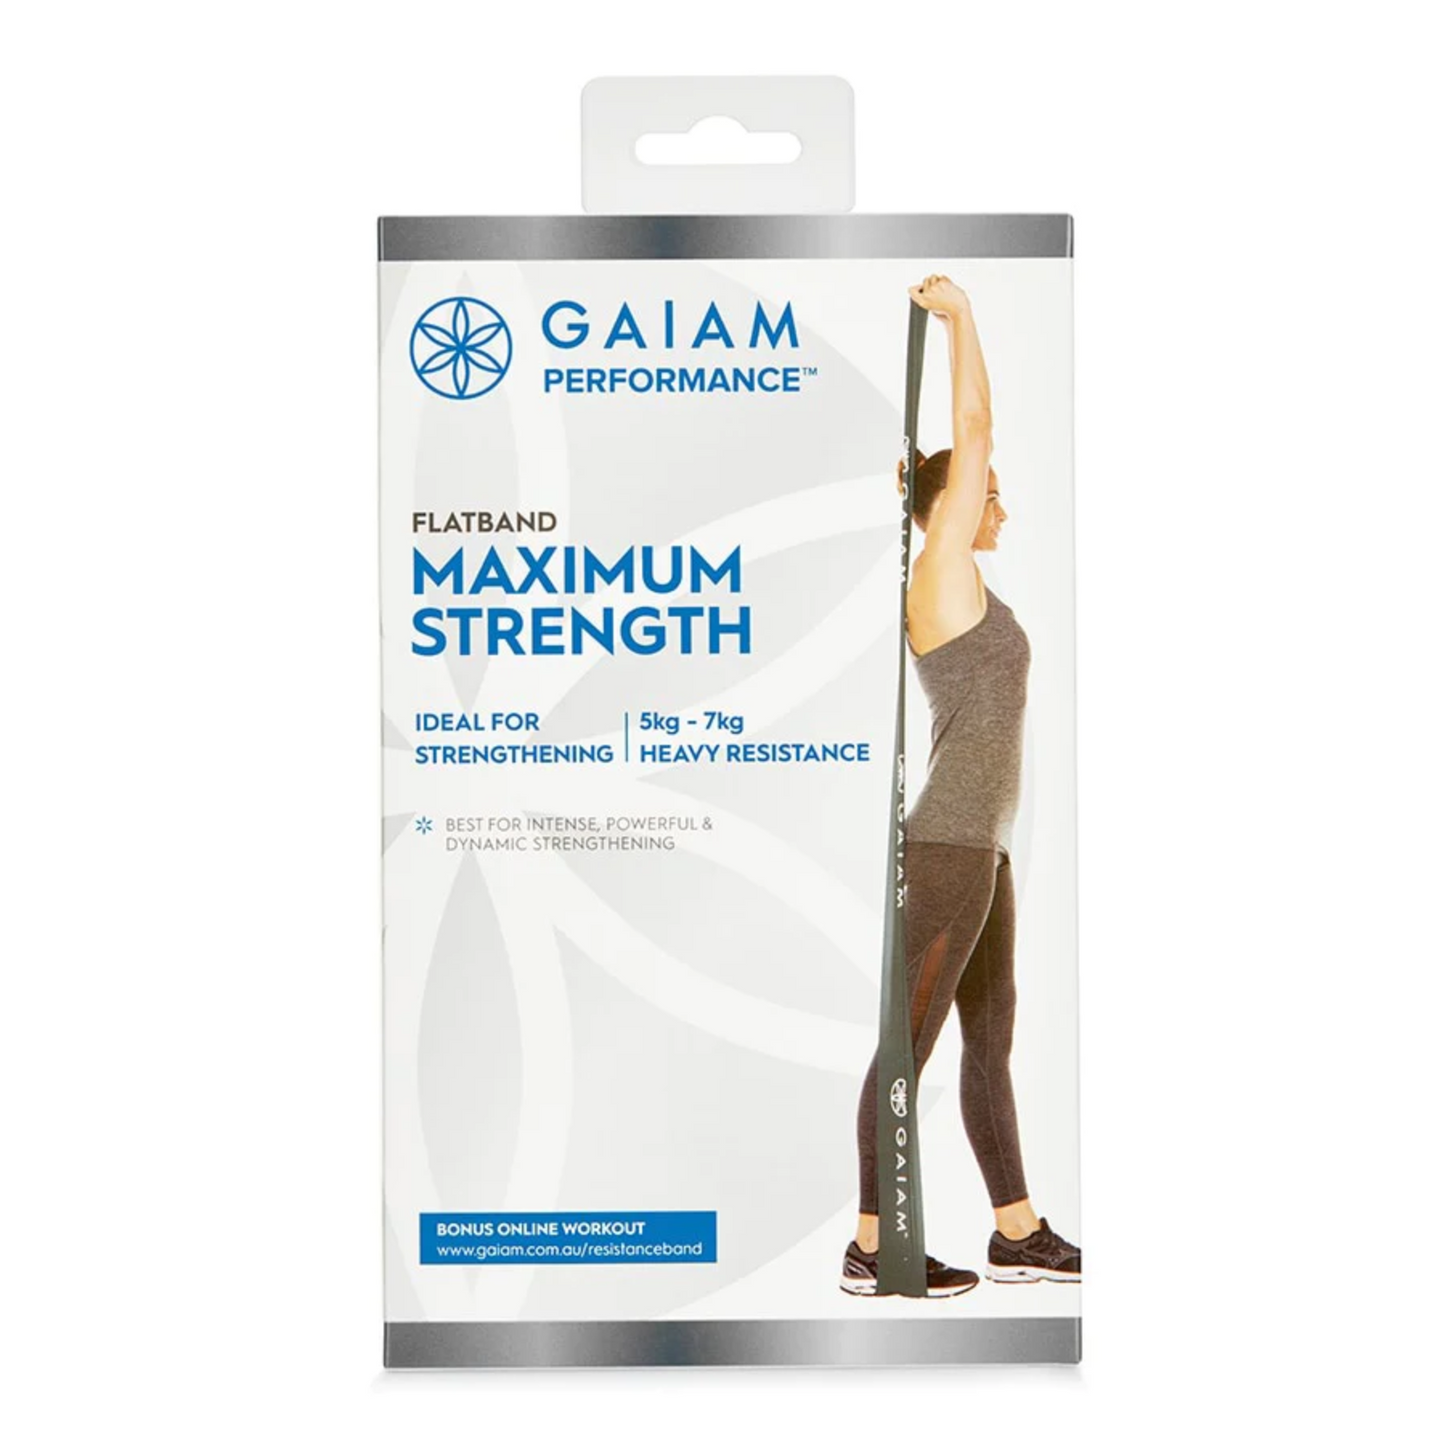 Gaiam Performance Flat Band Maximum Strength, Heavy Resistance